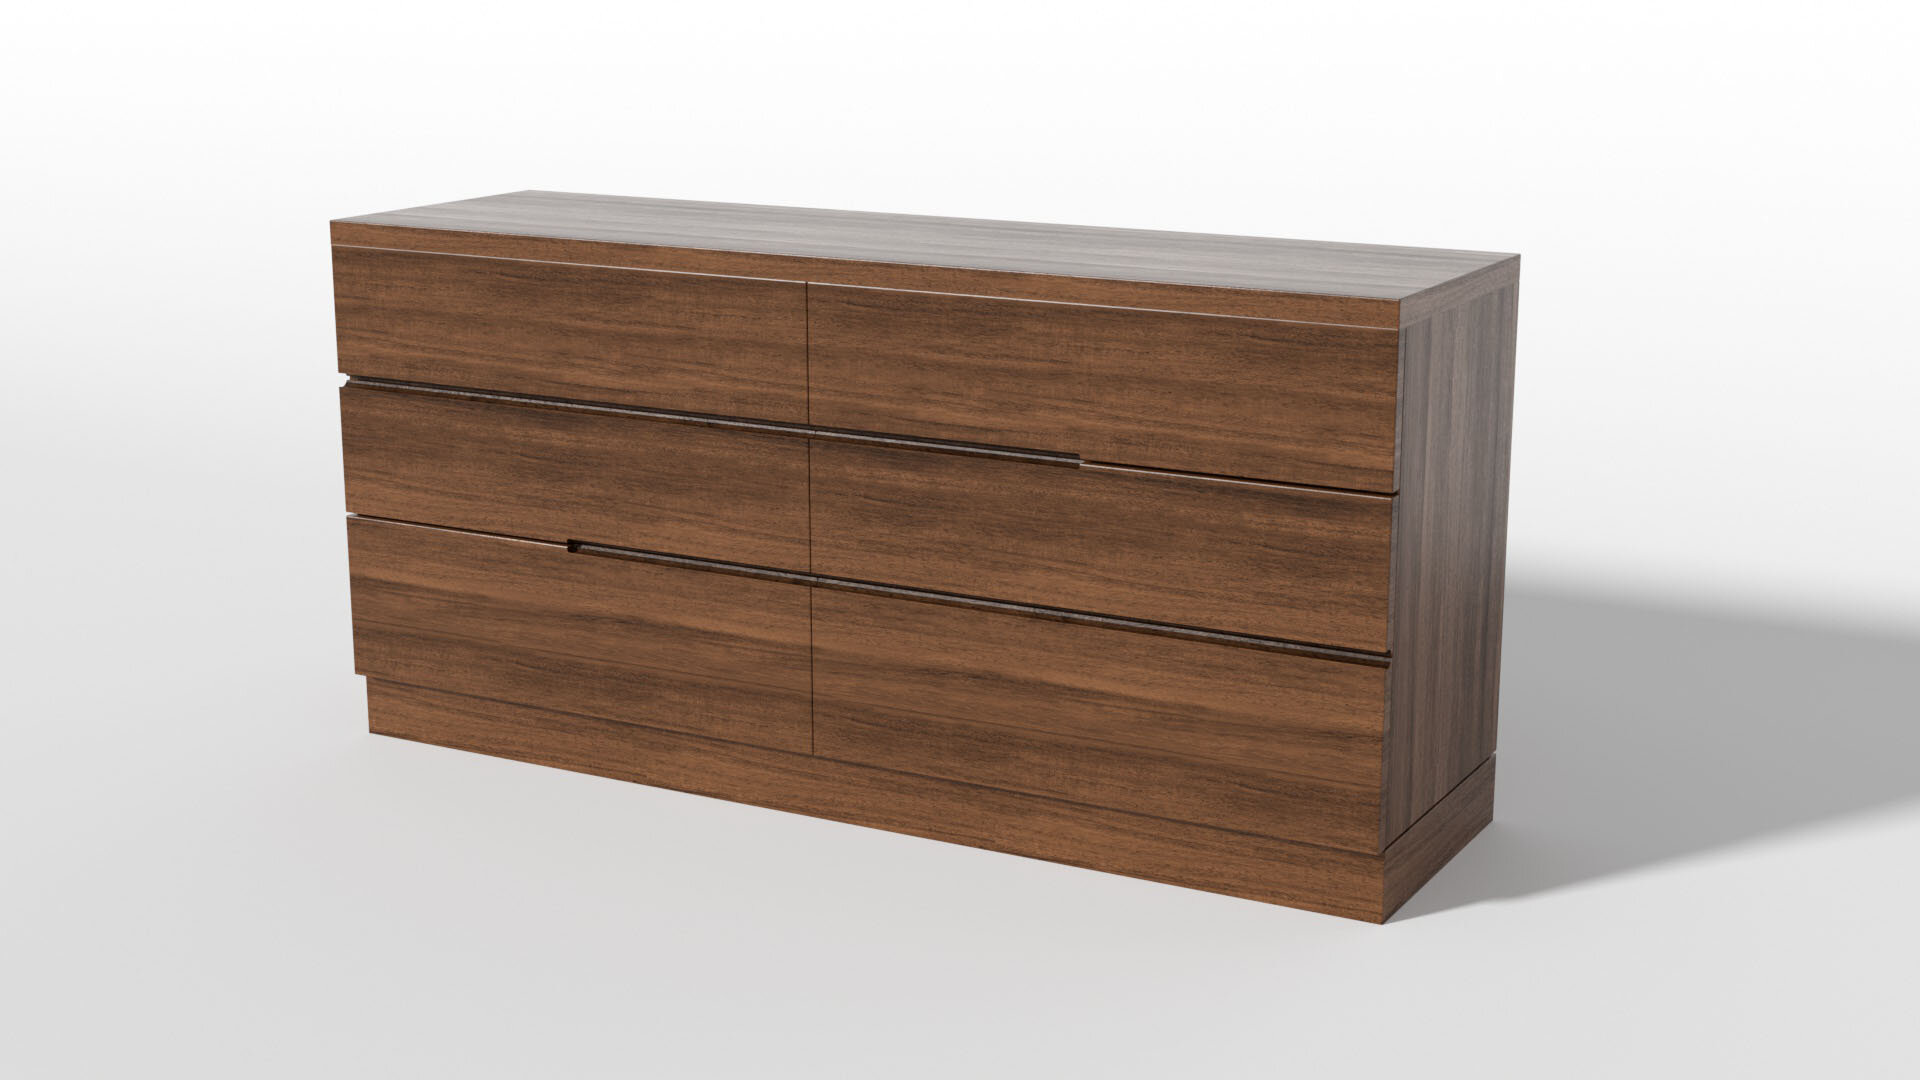 EK_Reedy_Furniture_Bridger_Bureau_Solid_Walnut_Luxury_Furniture_Handmade_Double_Drawer_Angle.jpg